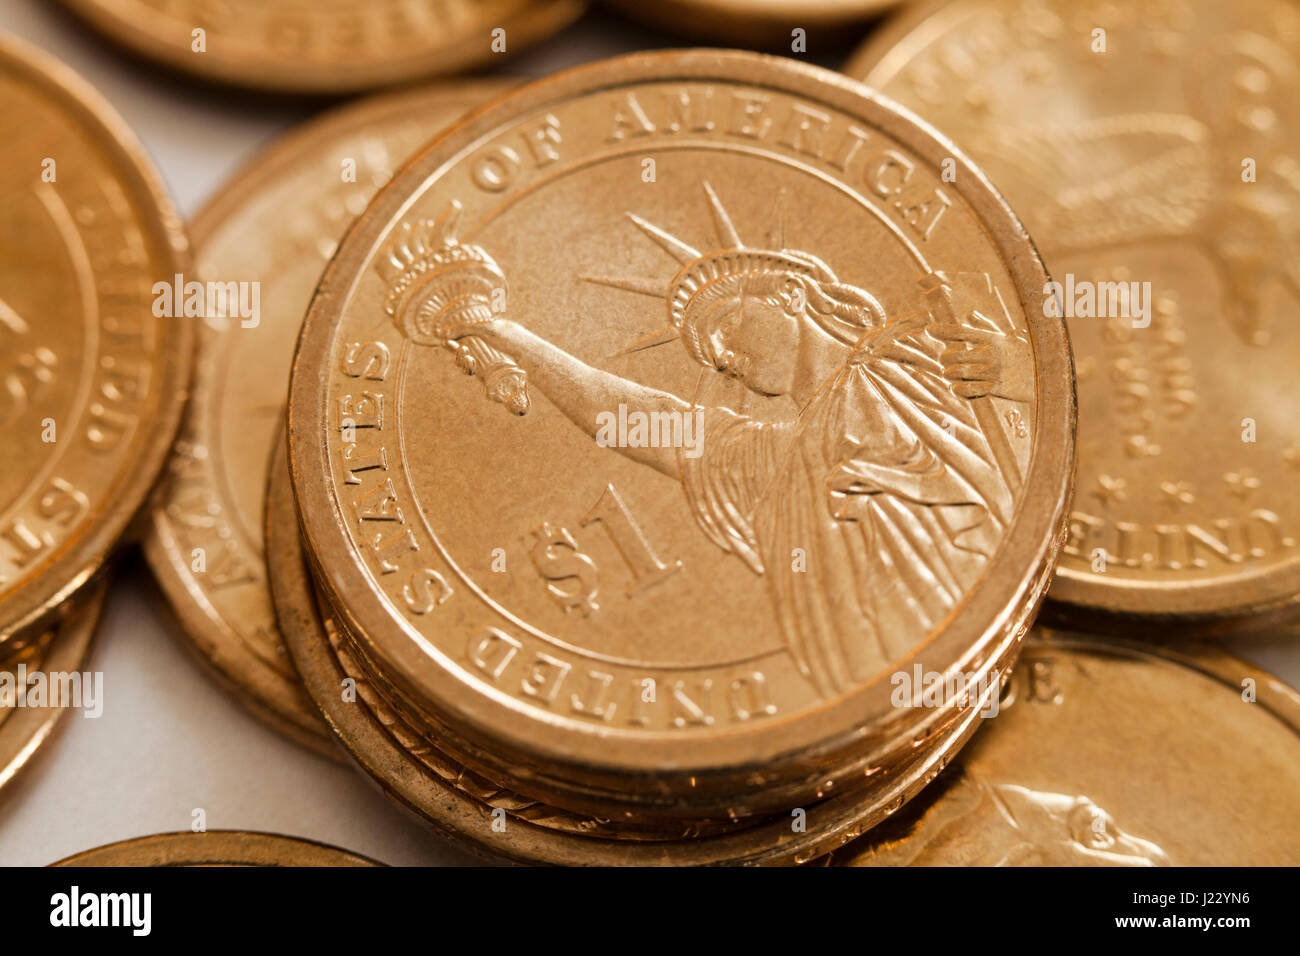 Presidential 1 dollaro moneta (US $ 1 monete in vista di retromarcia) - USA Foto Stock